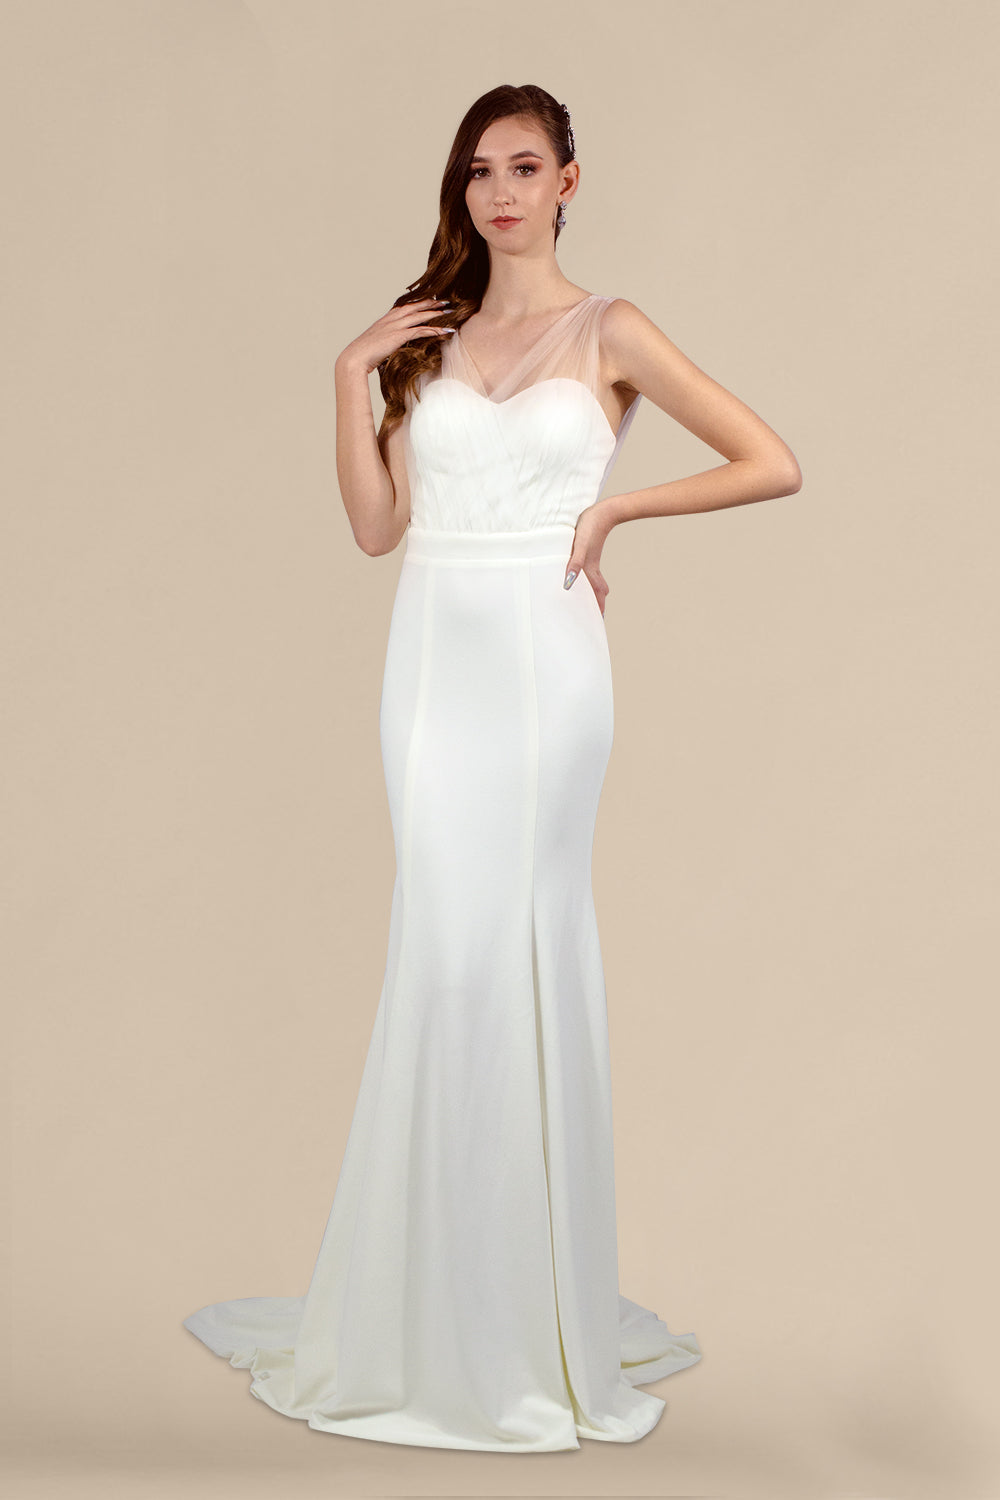 custom made ivory simple wedding gowns perth australia bridal dressmaker envious bridal & formal